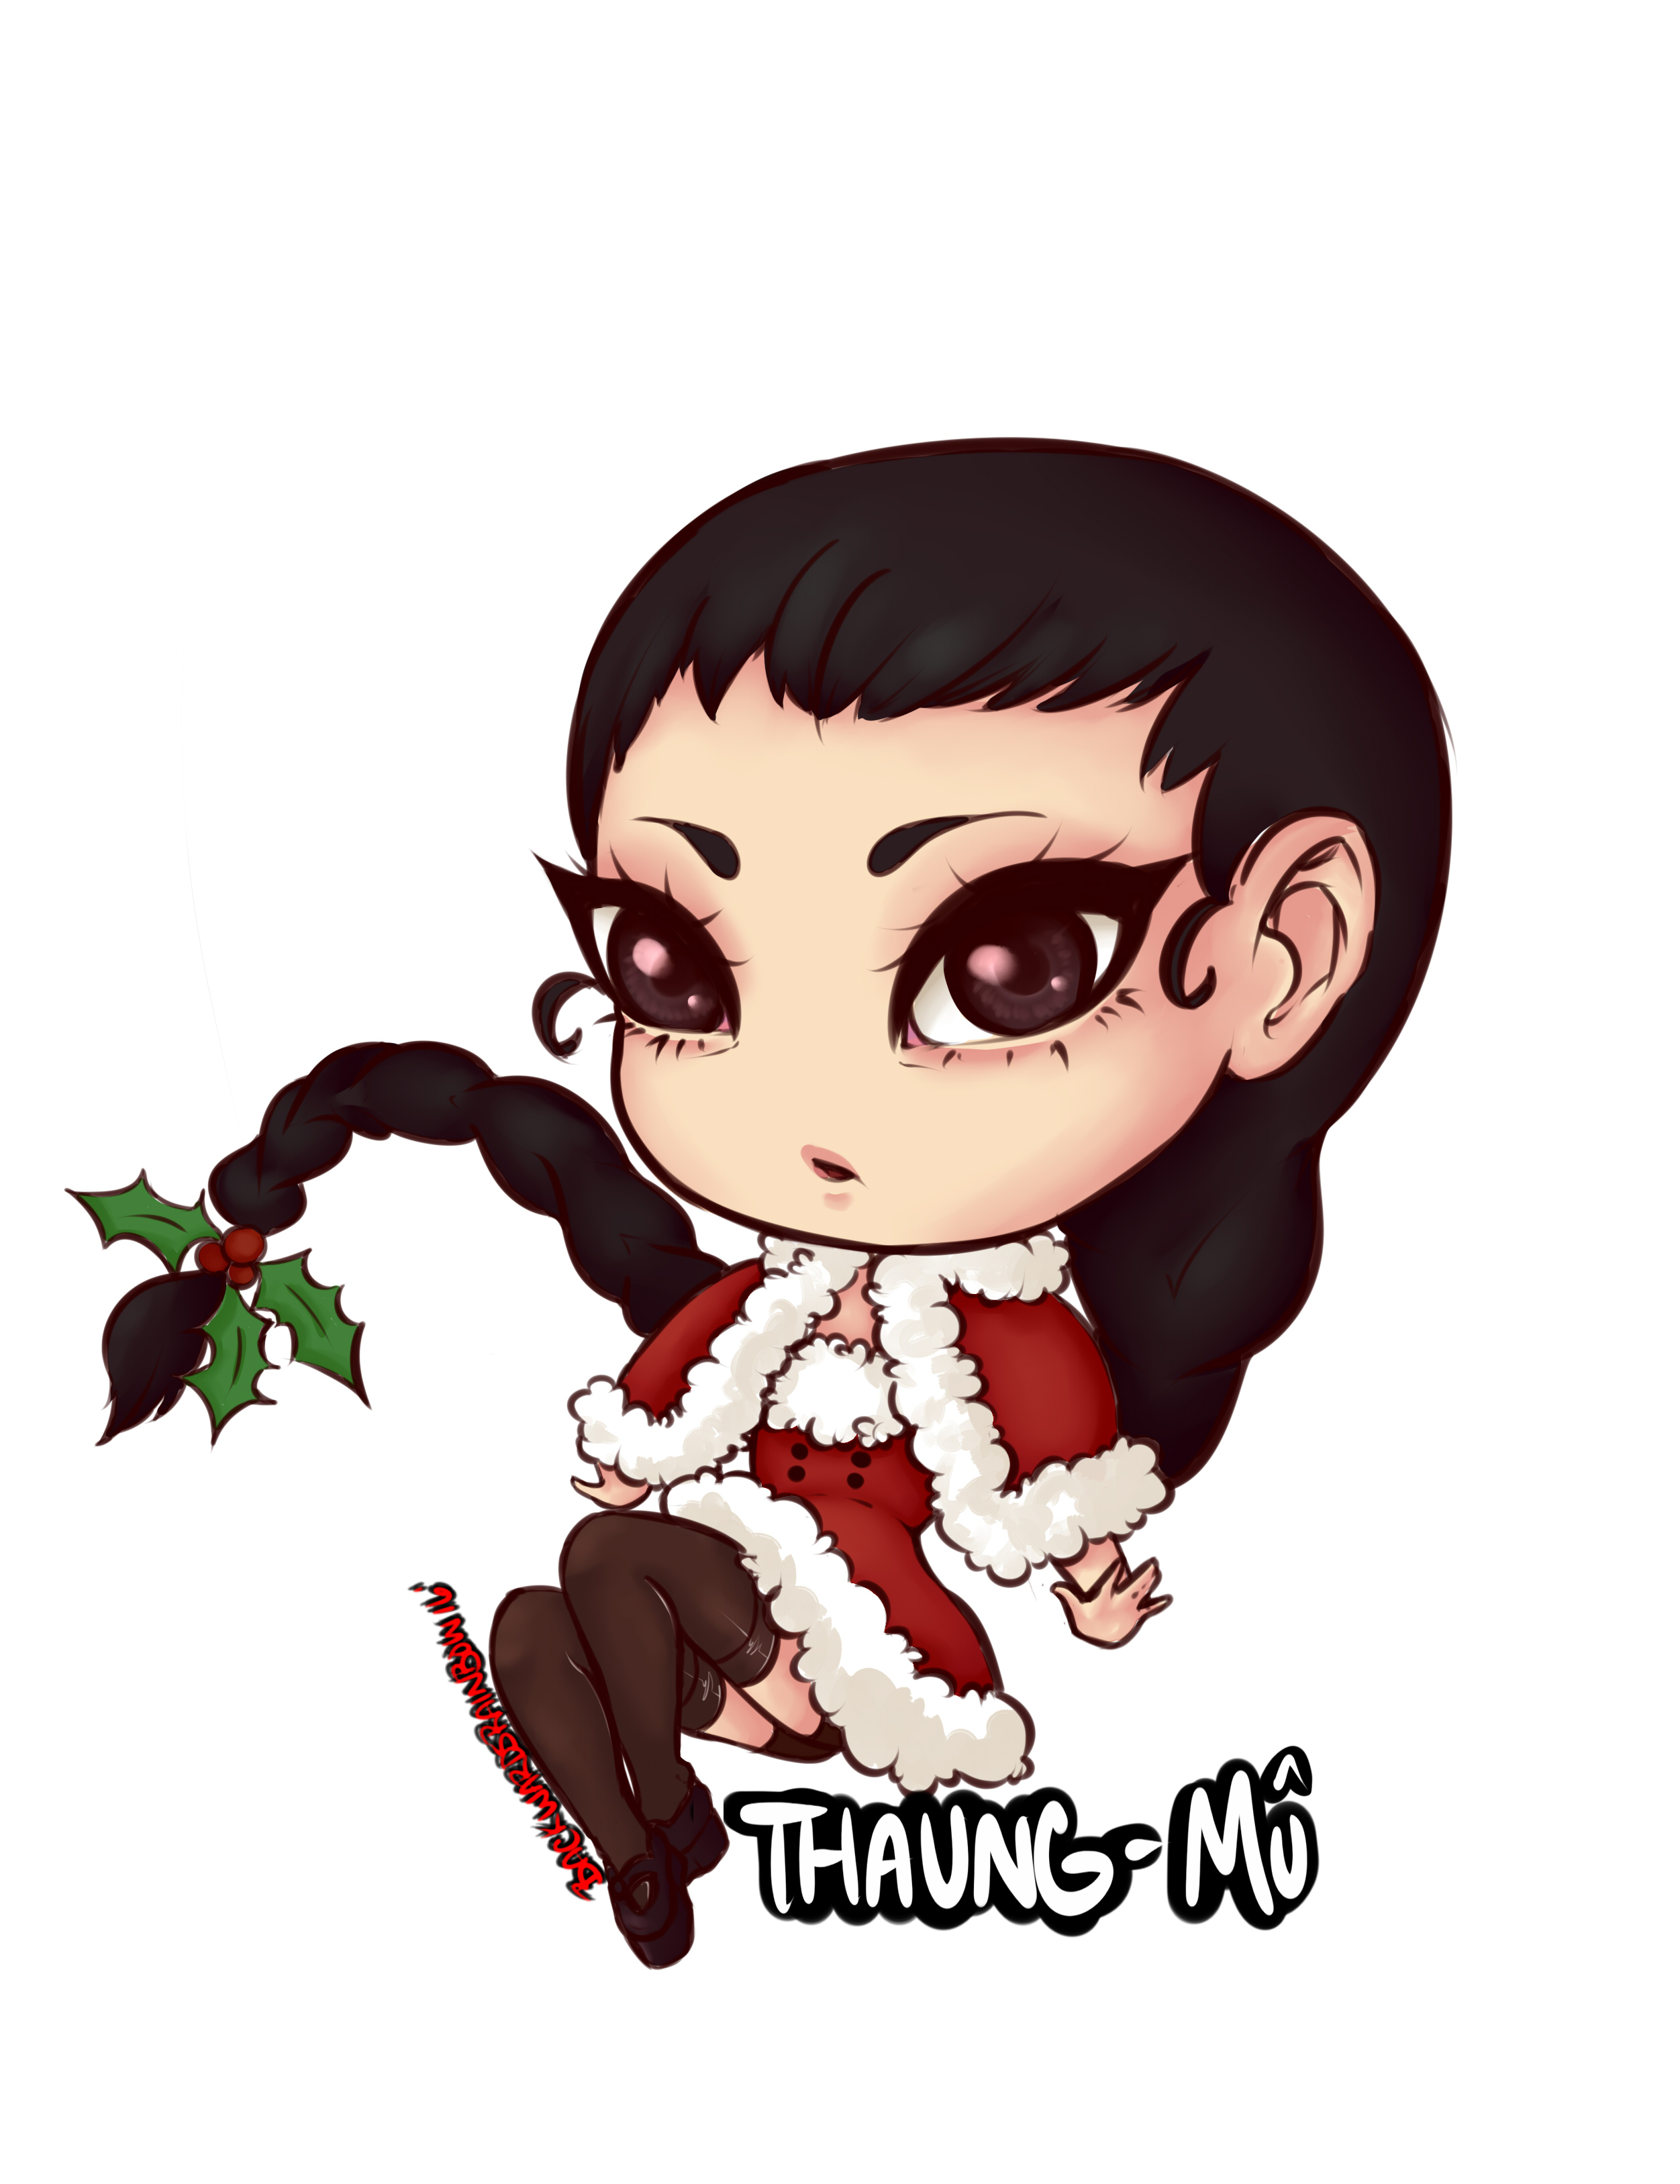 Thaung-Mu Christmas